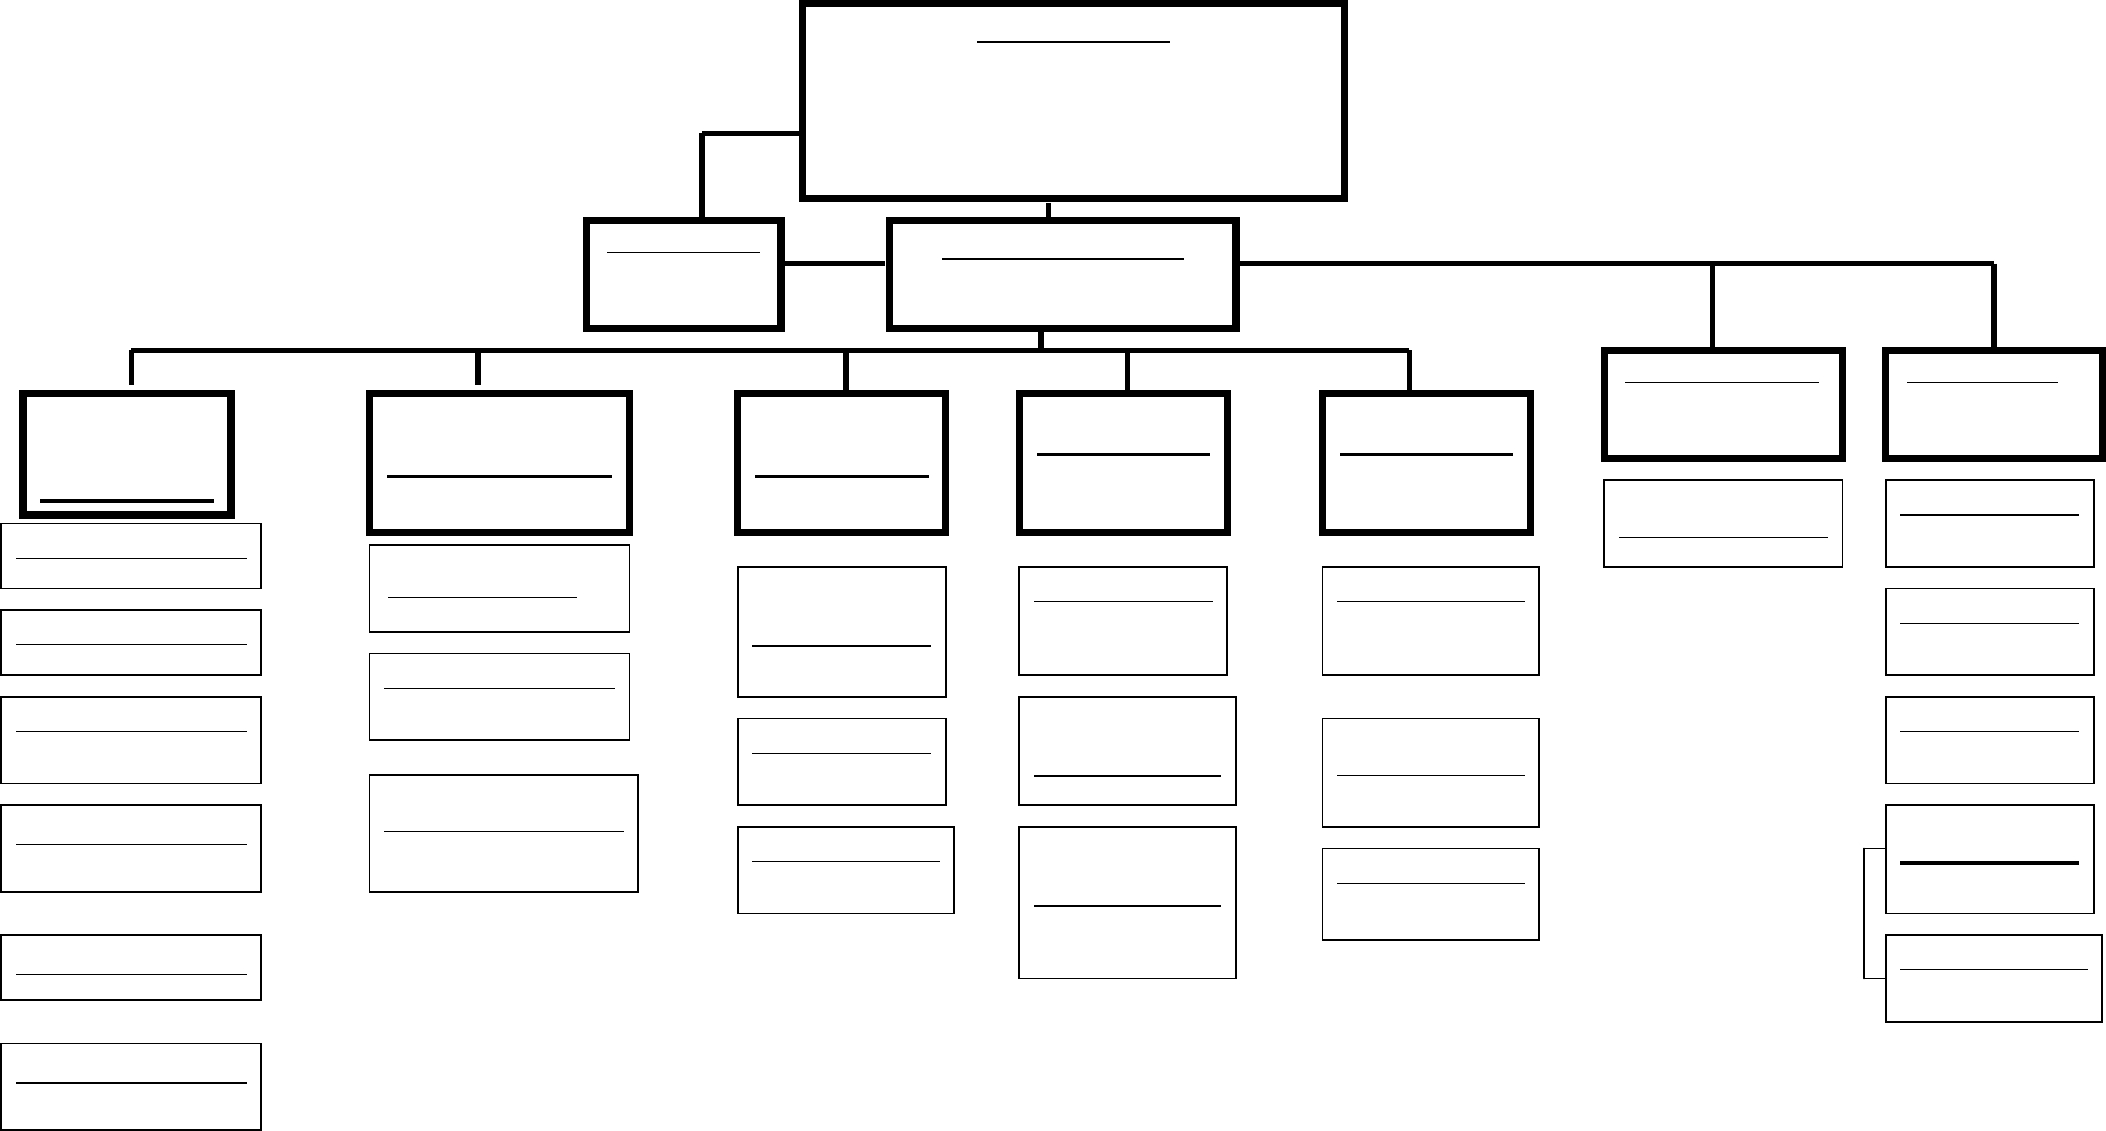 Blank Organizational Chart - Cumberland College Free Download Within Free Blank Organizational Chart Template